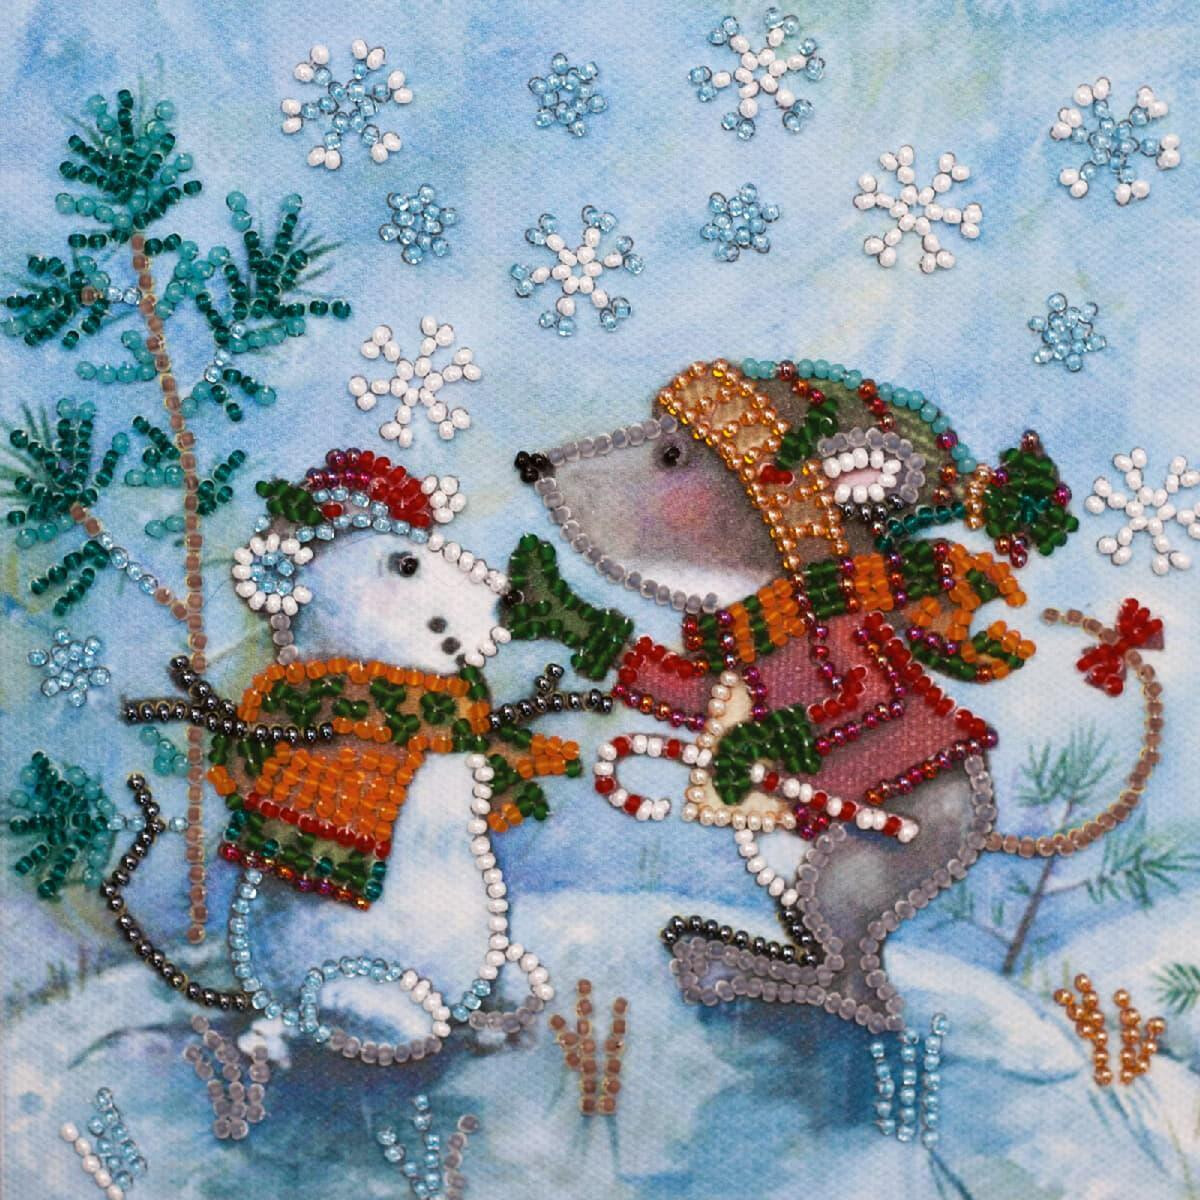 Abris Art stamped bead stitch kit "Snow...